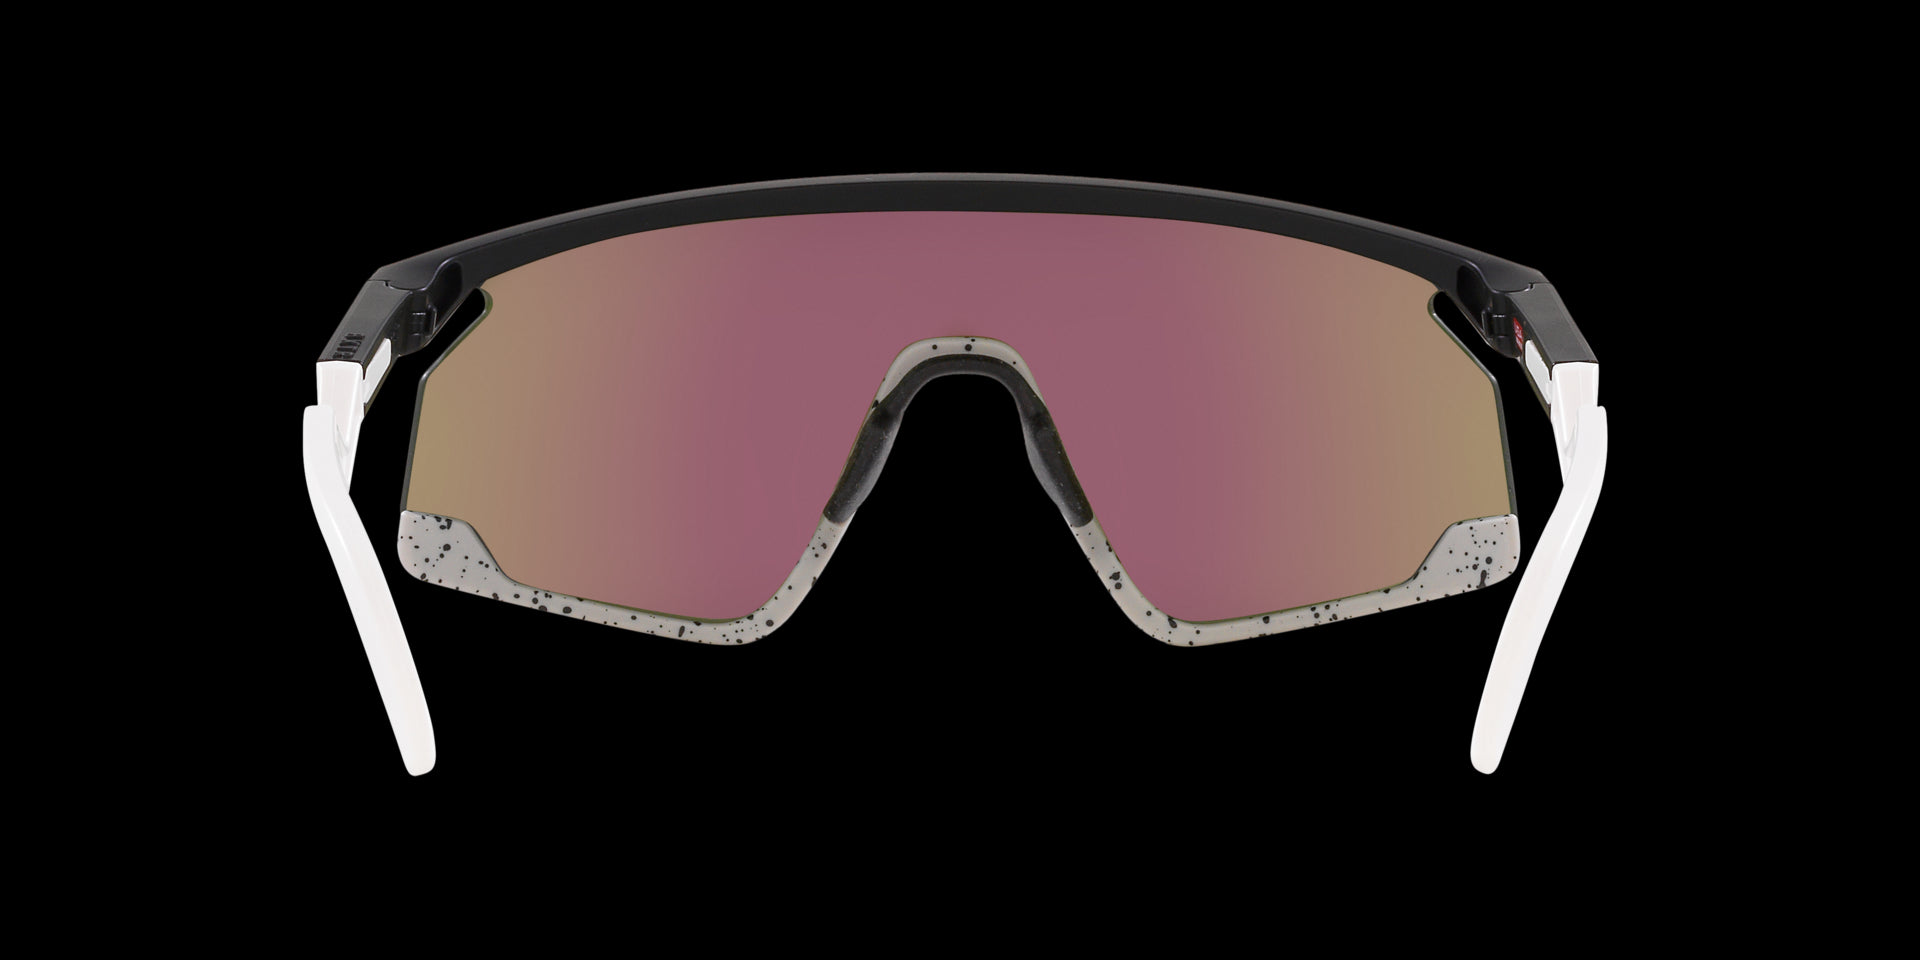 Blue/black BXTR sunglasses